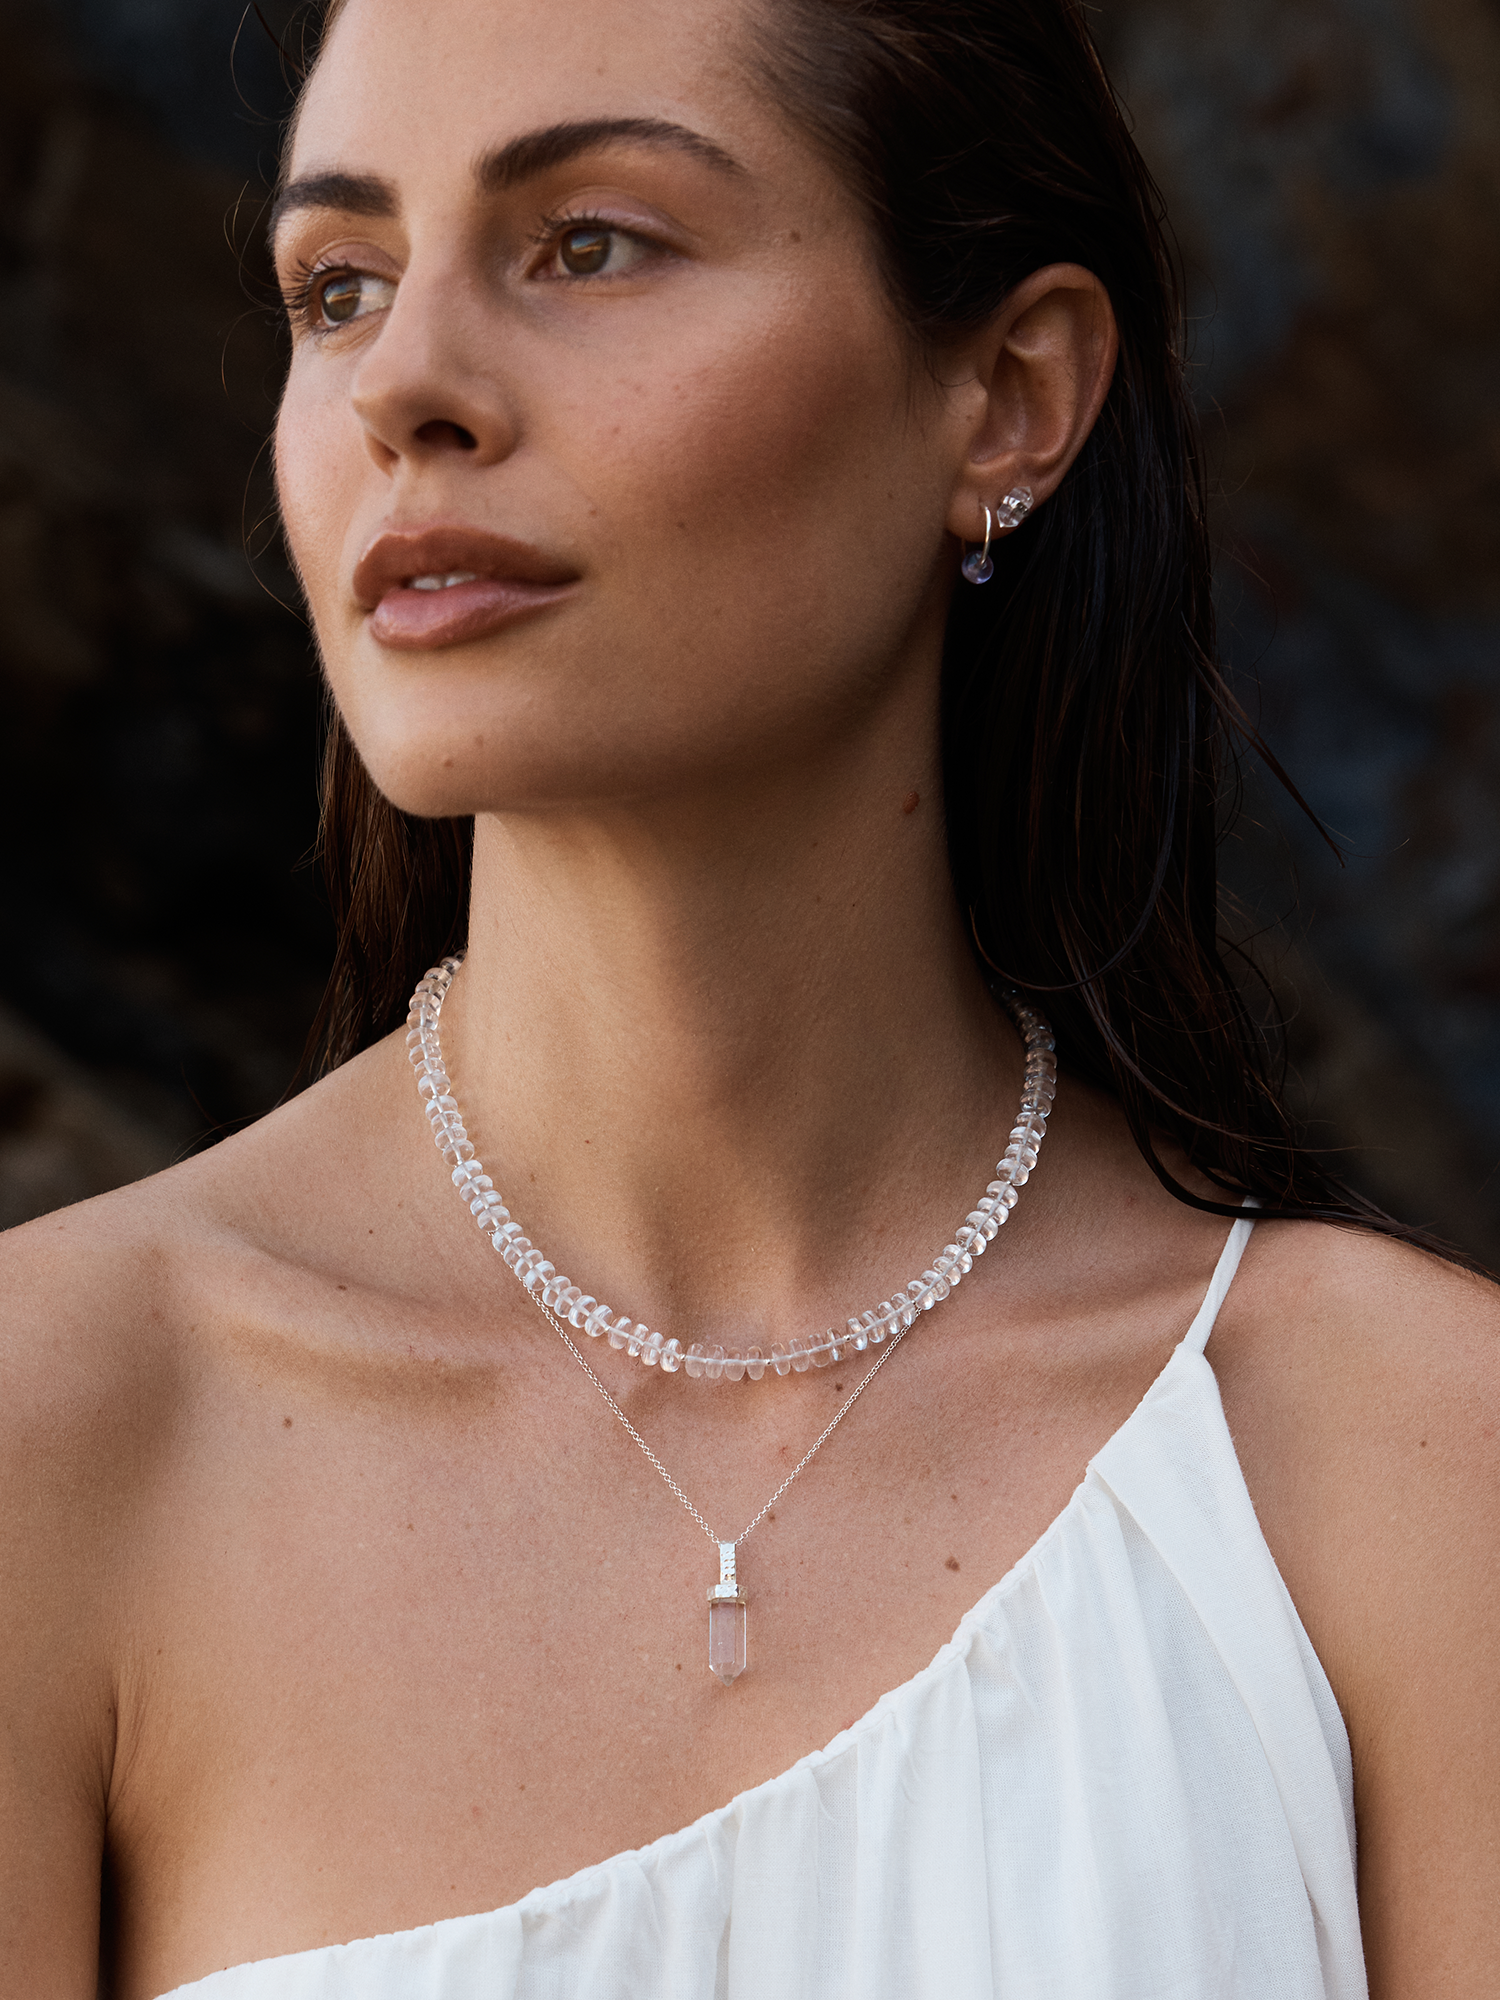 evoke necklace | clear quartz